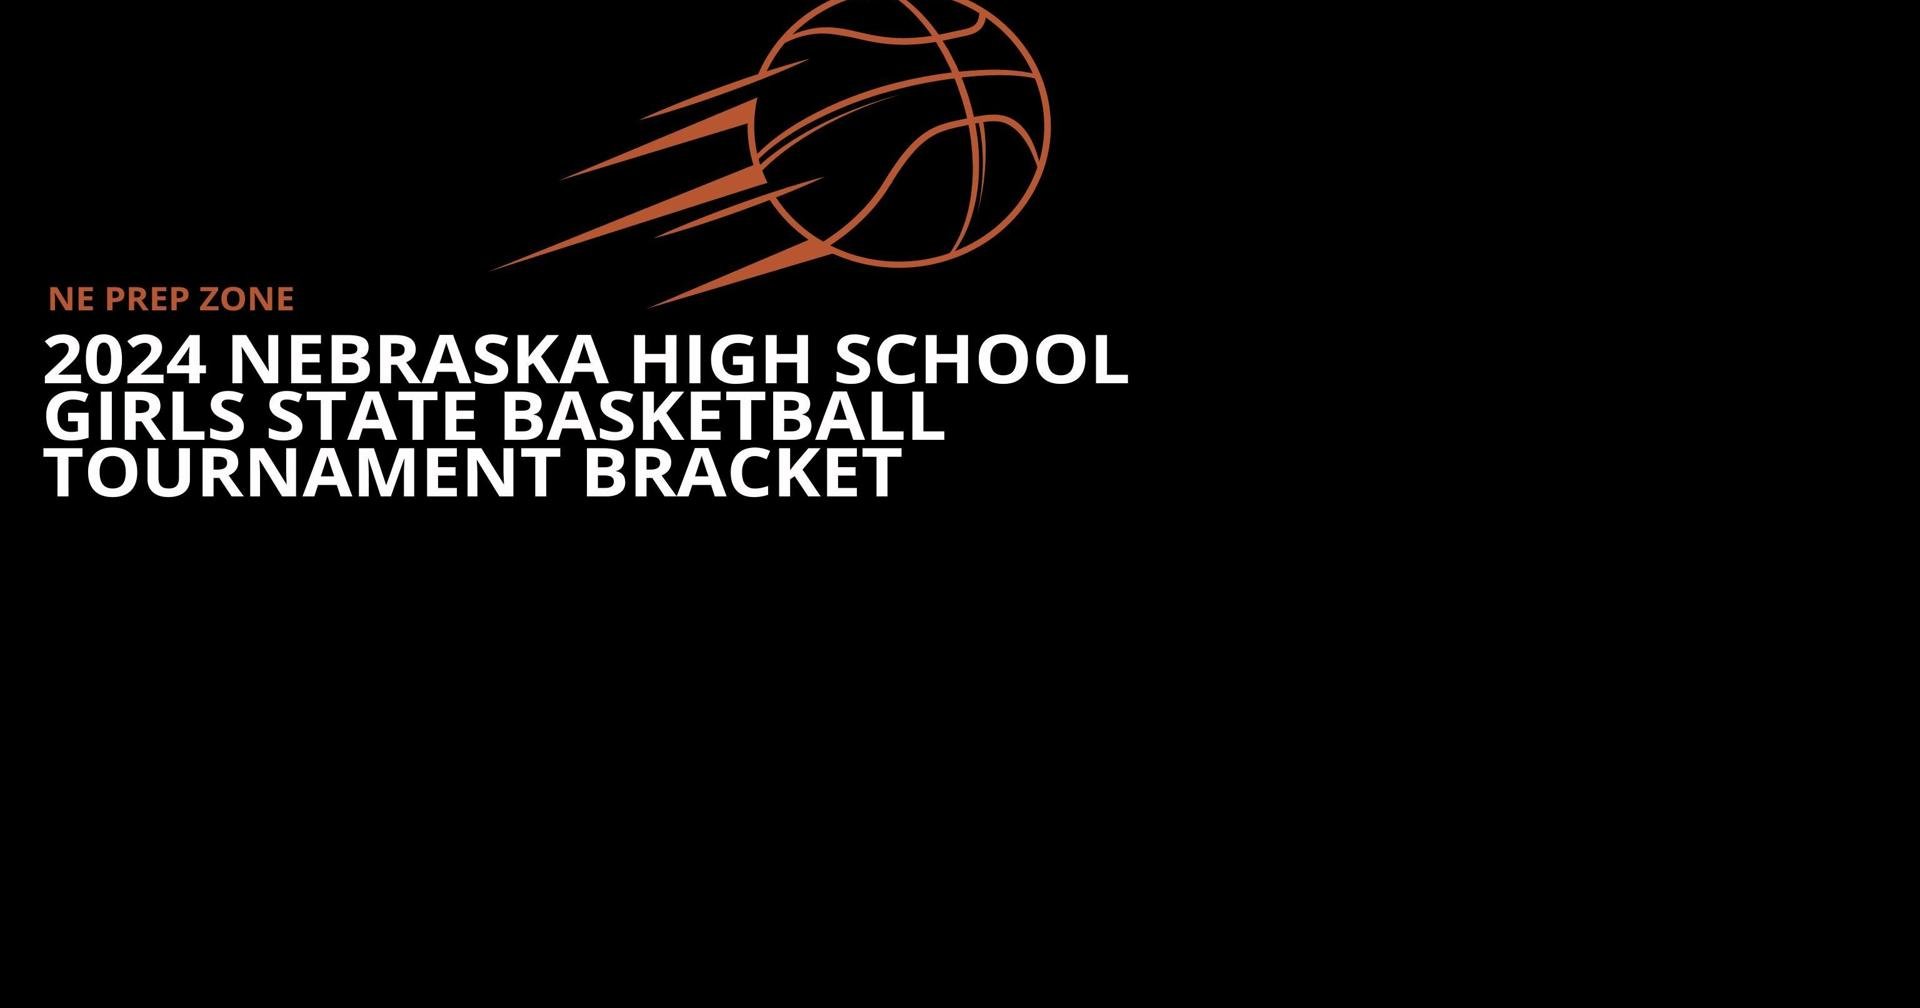 2024 Nebraska high school girls state basketball tournament bracket